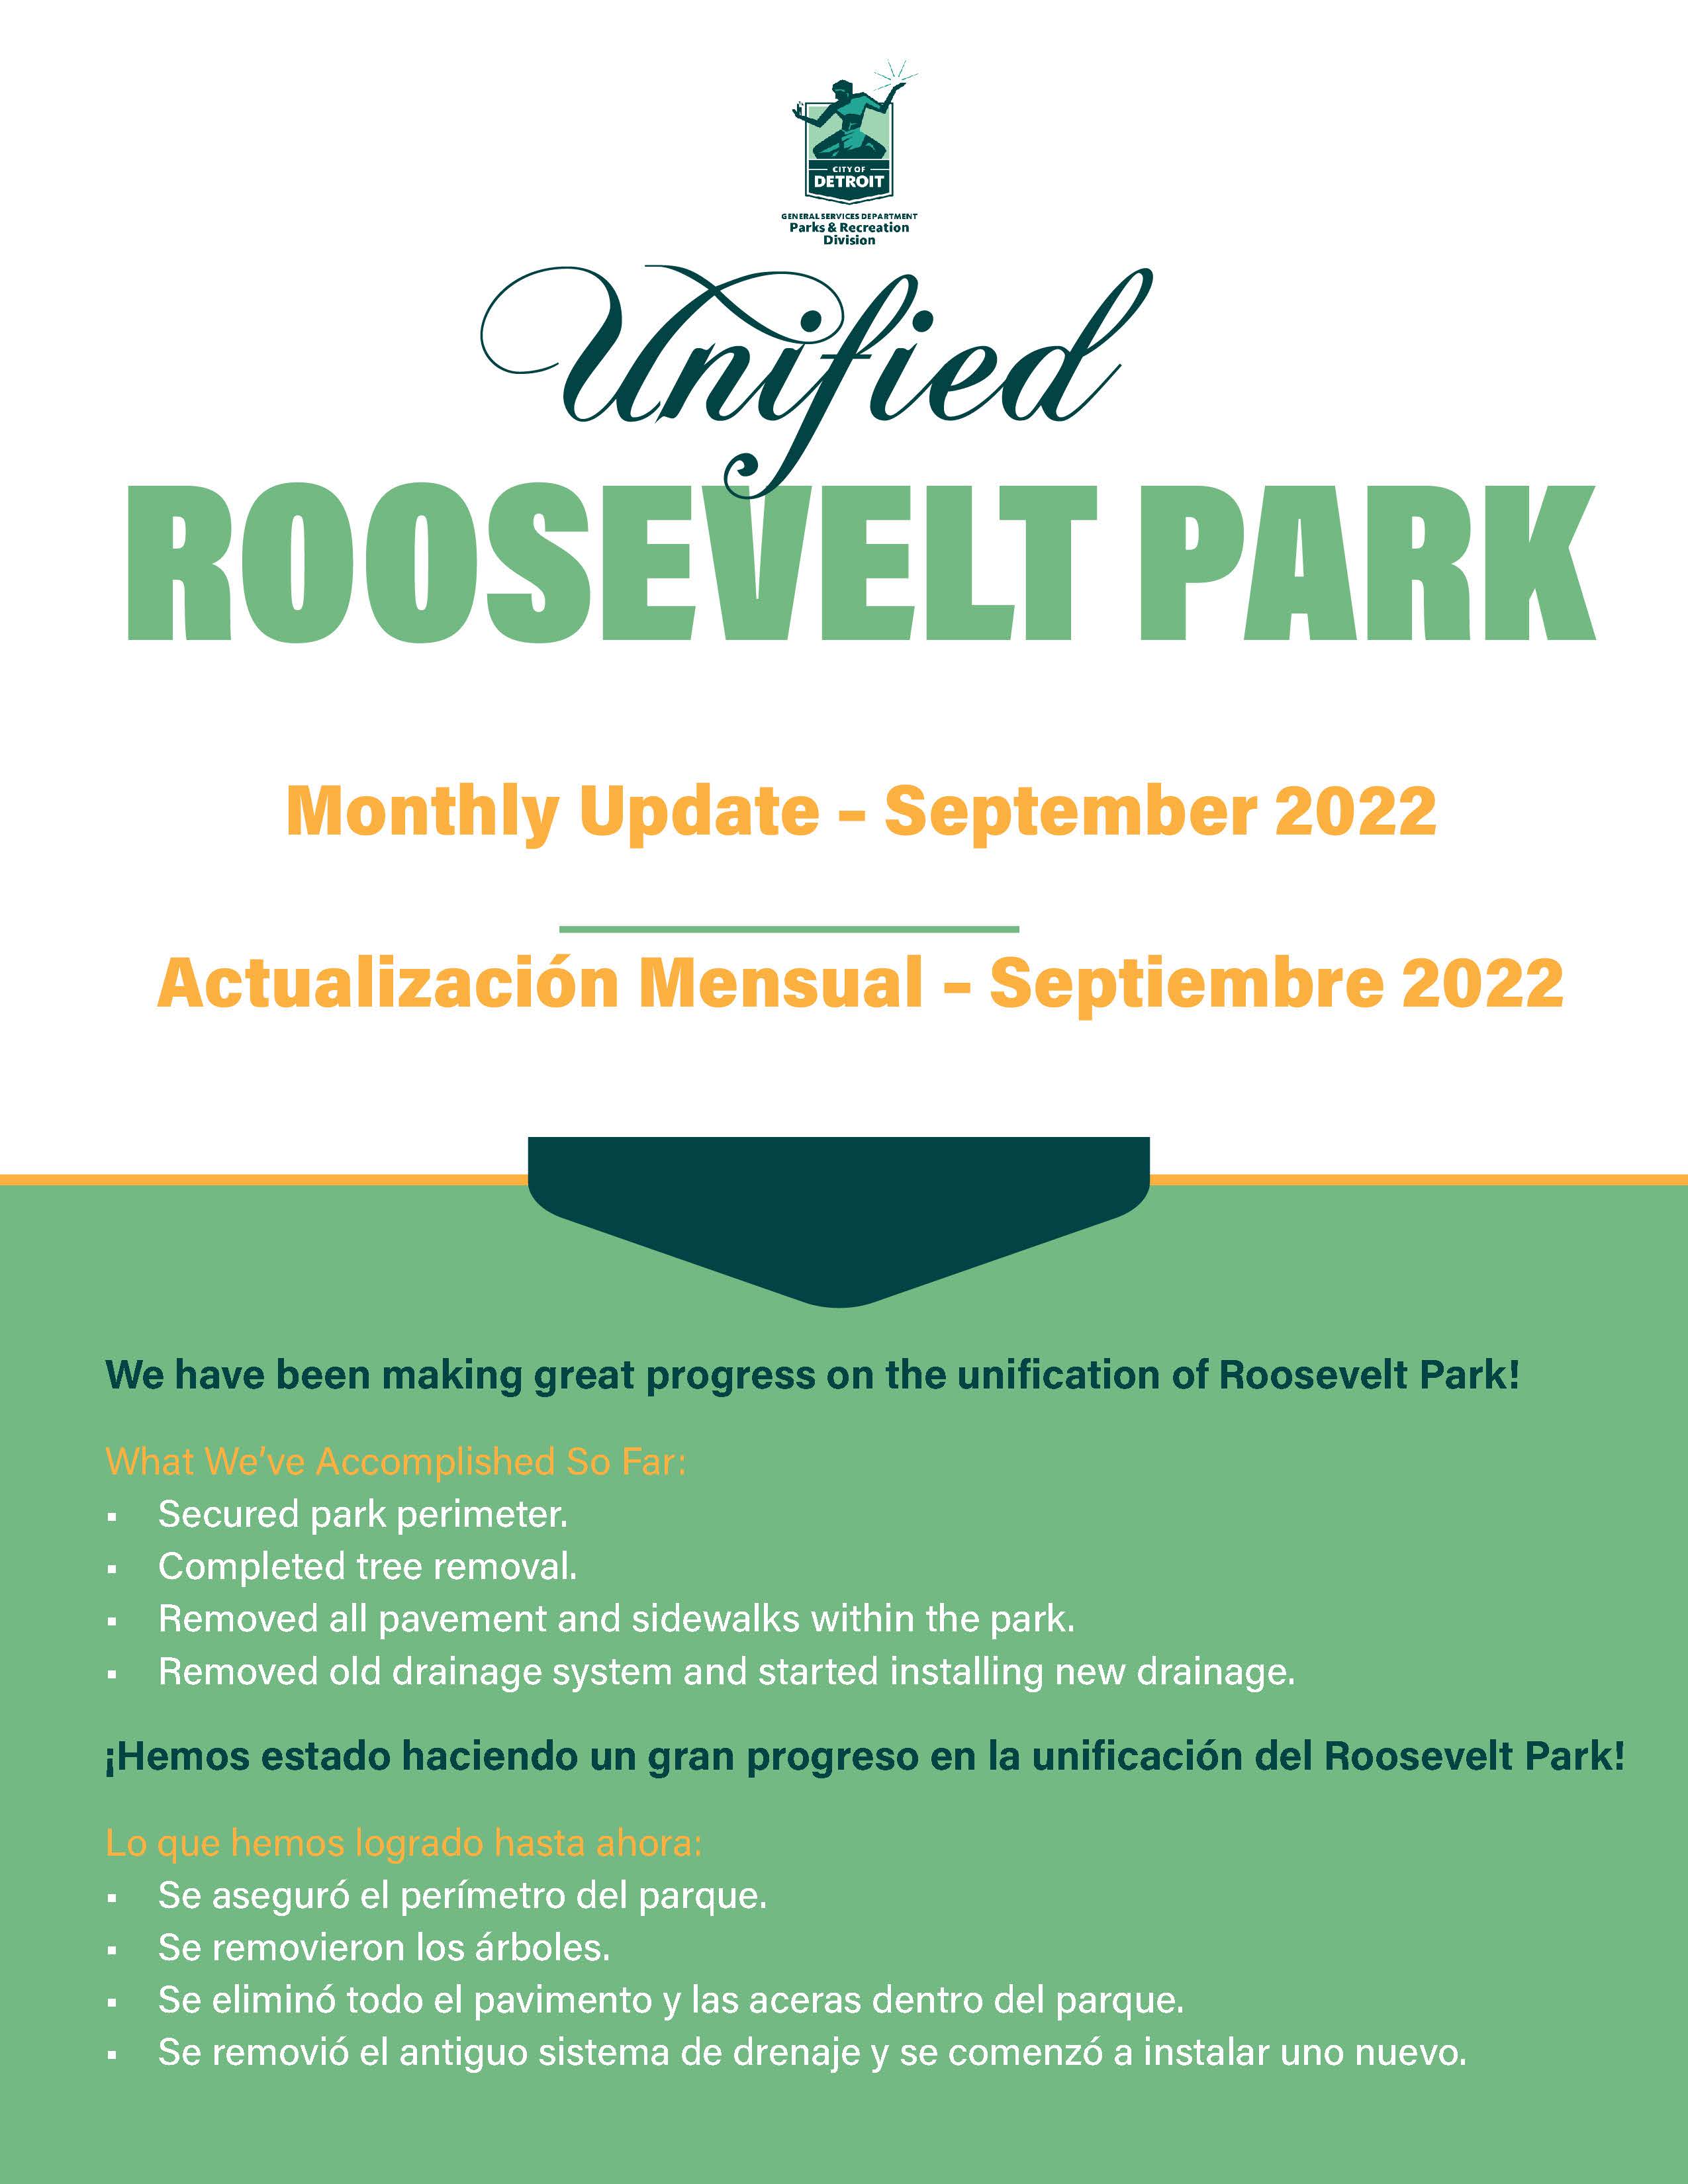 Roosevelt Park Construction Update for September '22